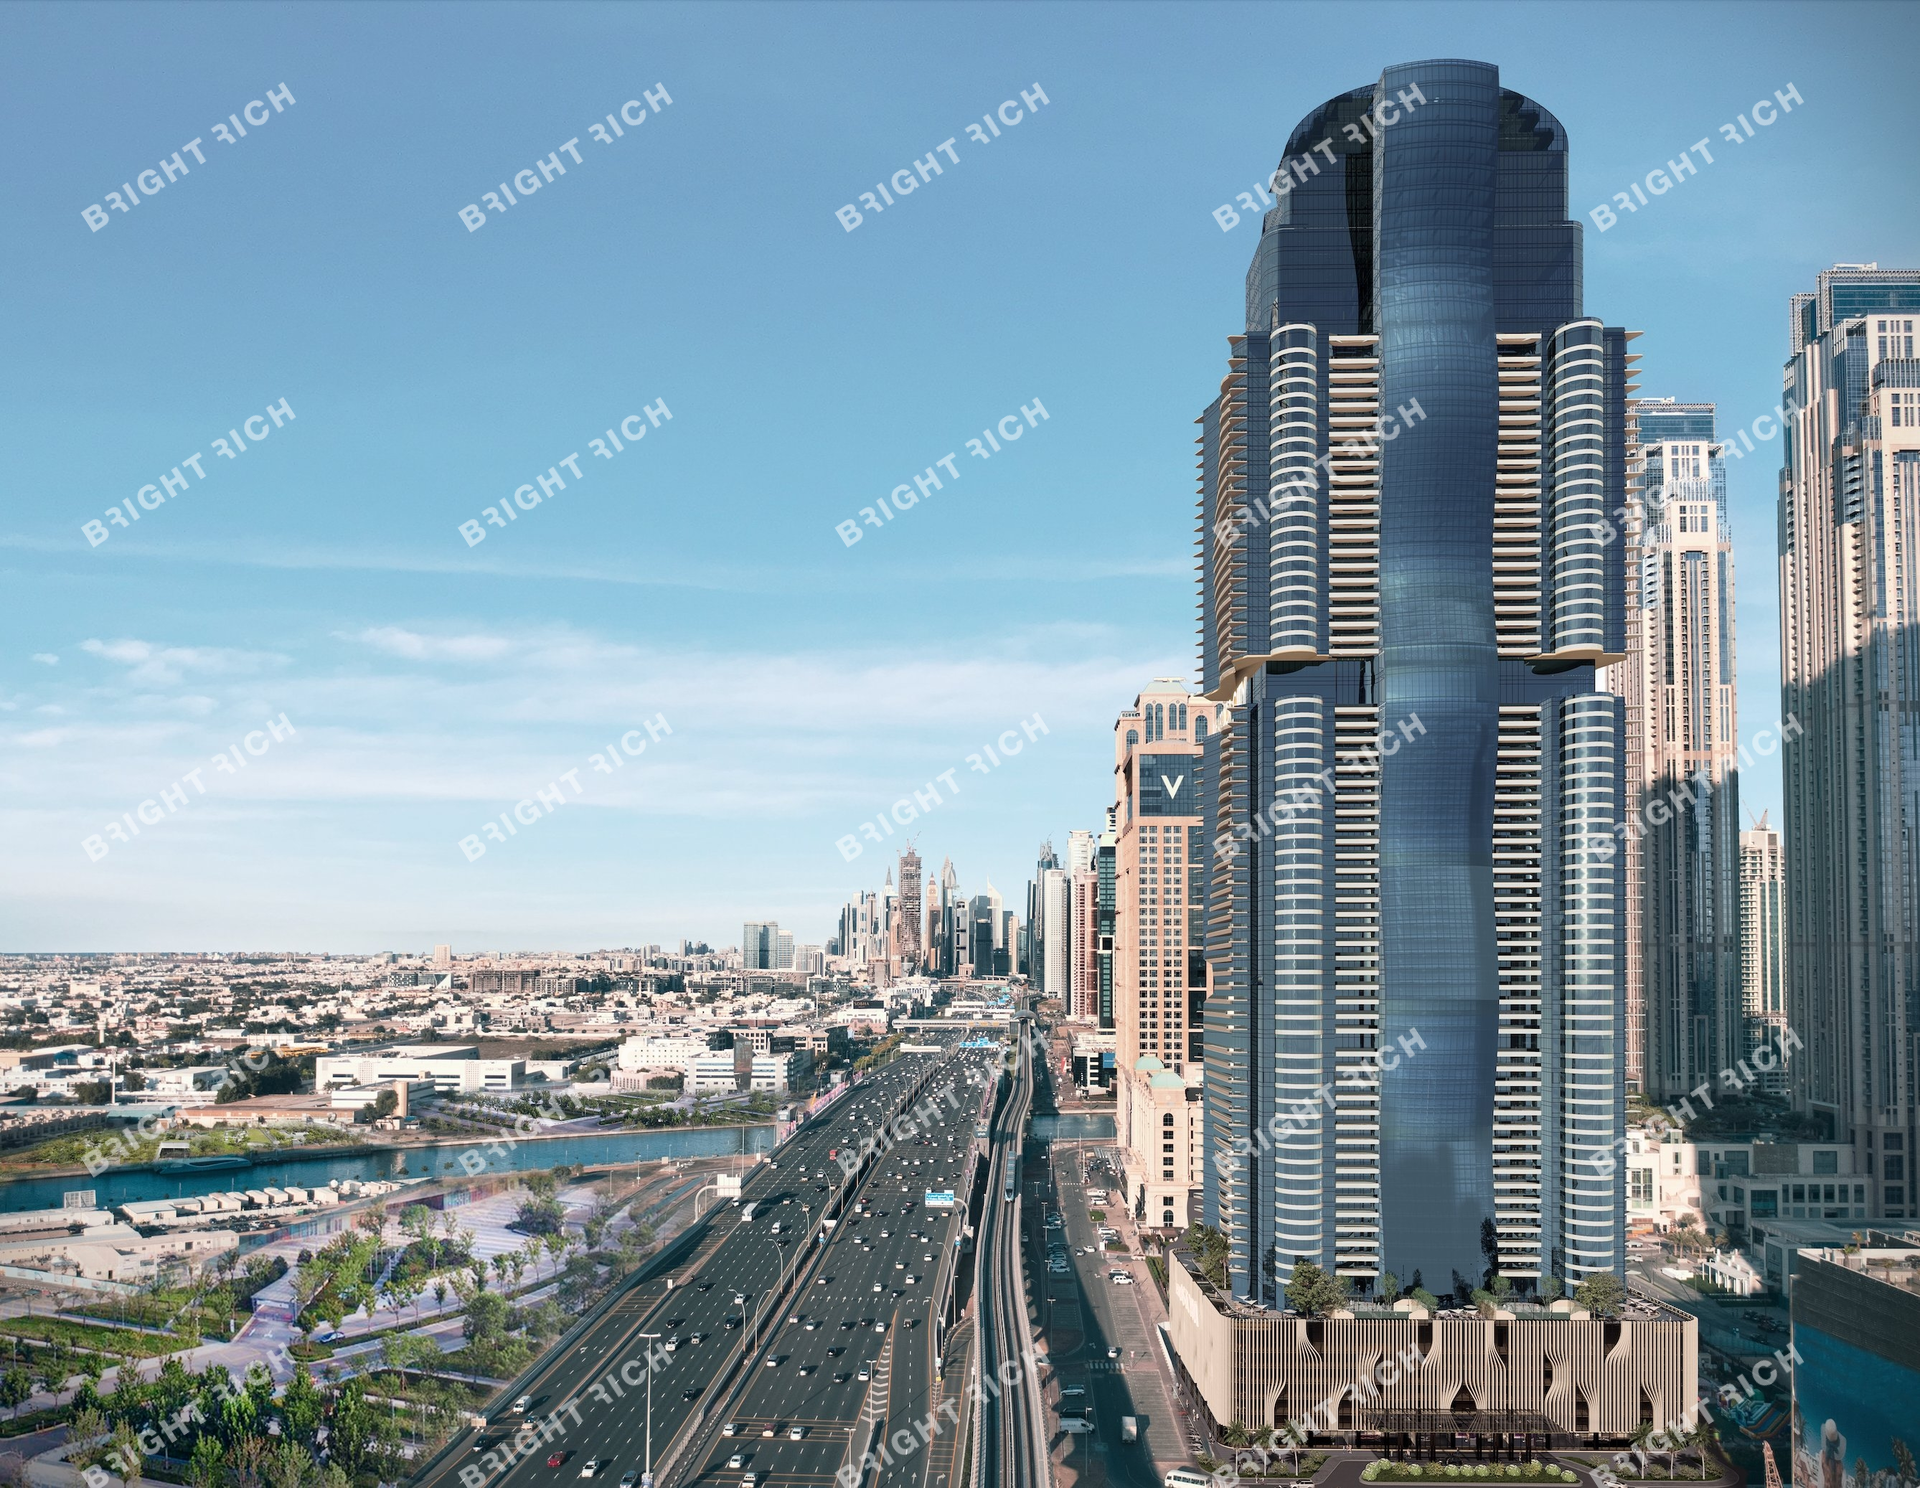 Al Habtoor Tower, апарт-комплекс в Дубае - 3